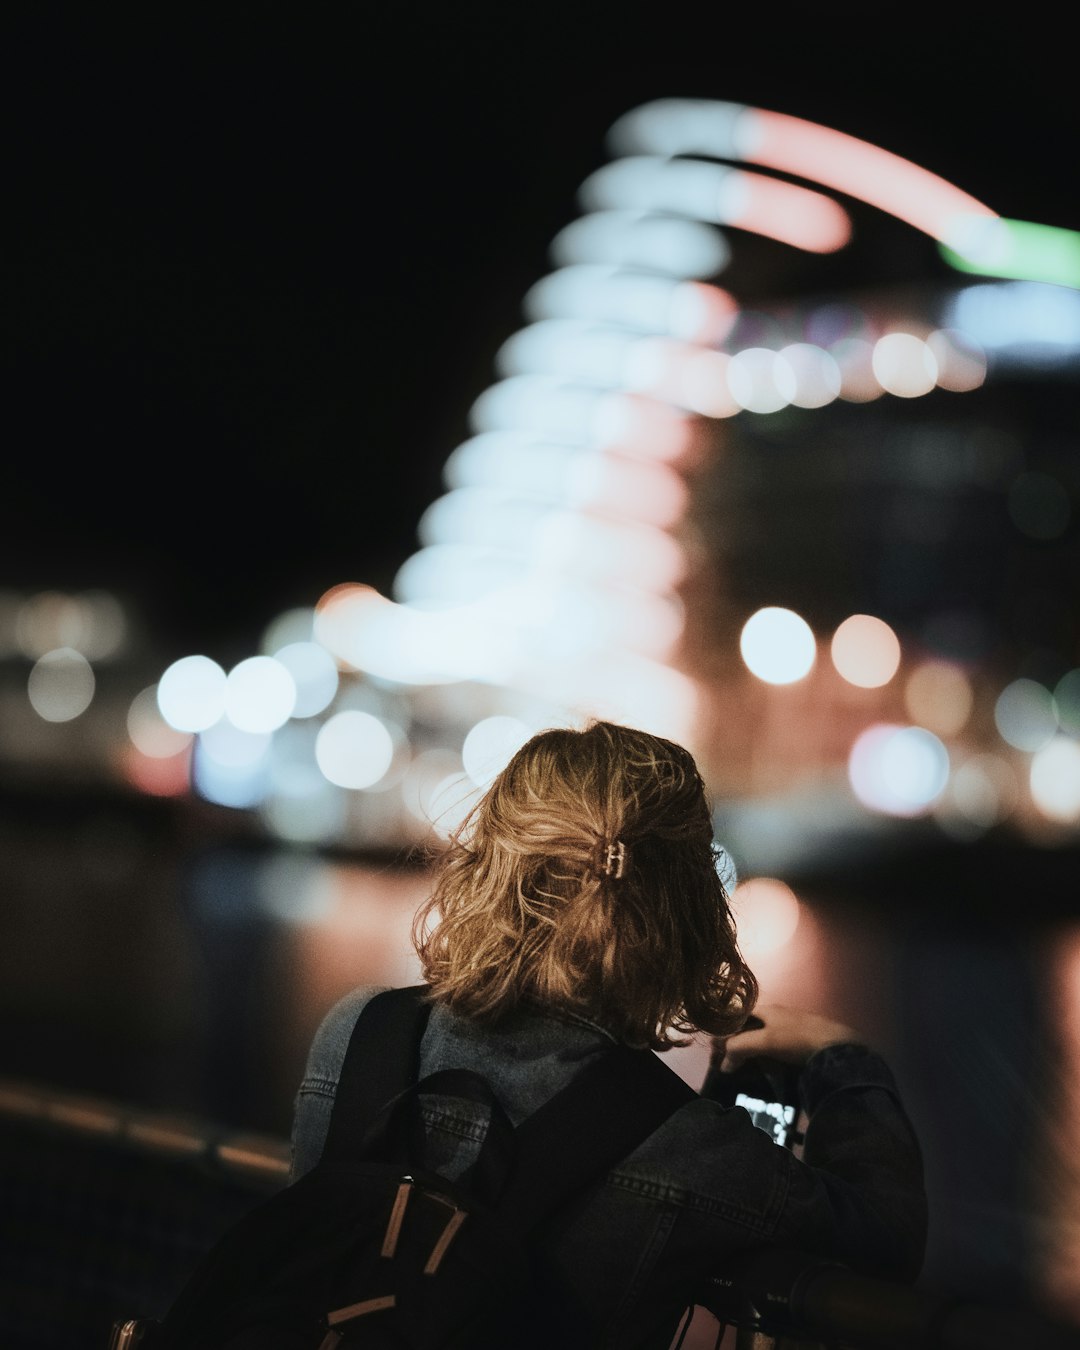 woman in black jacket standing on sidewalk during night time